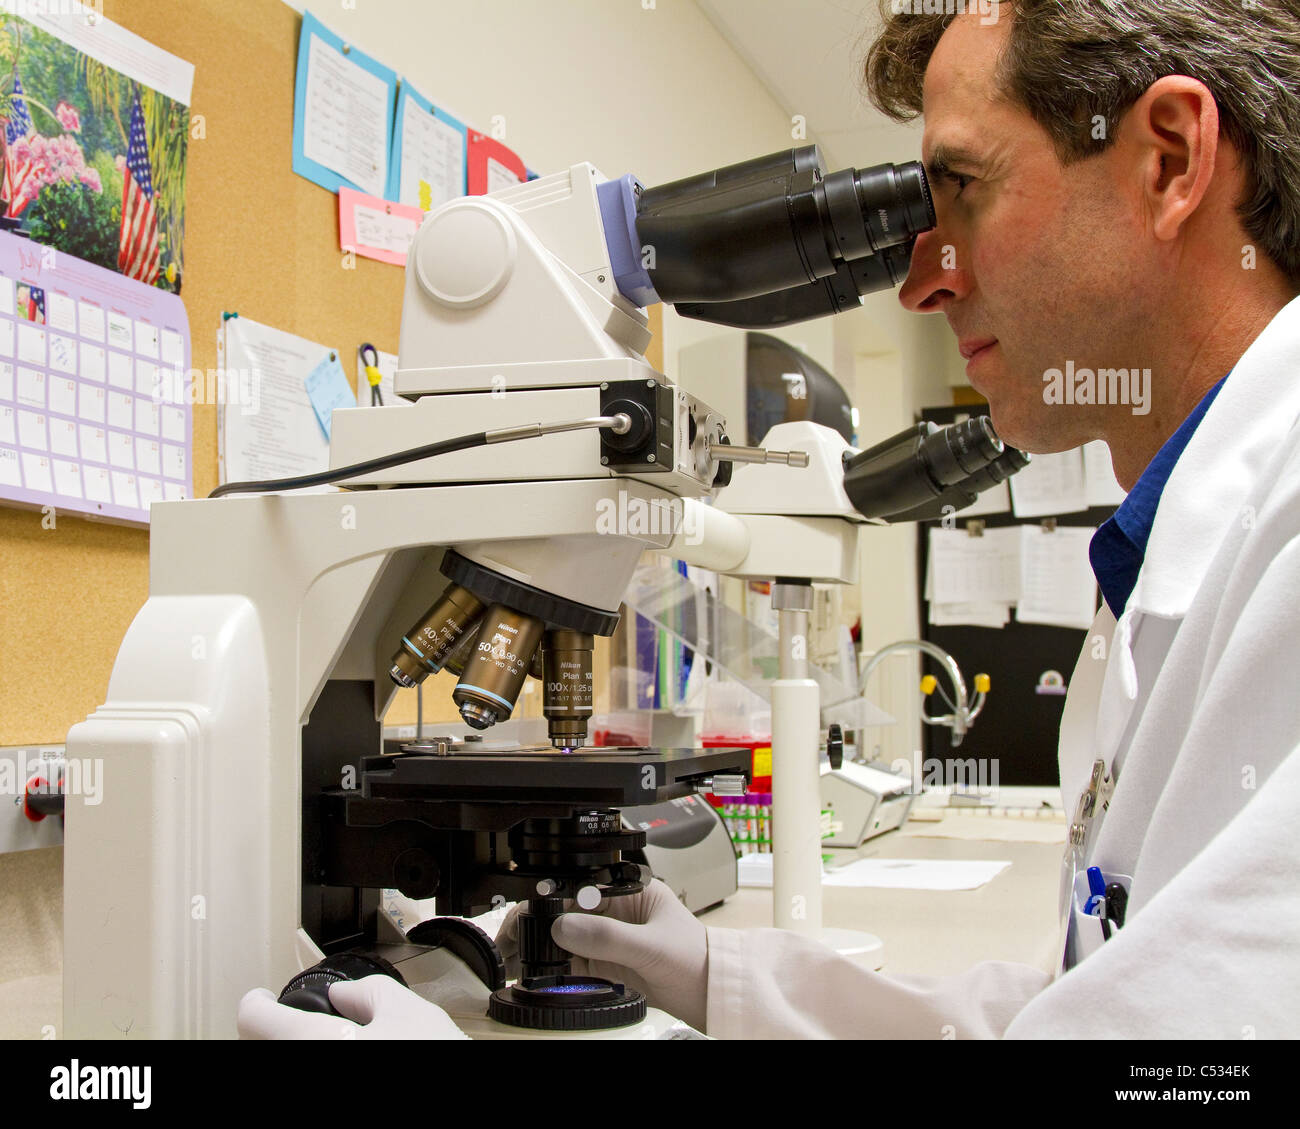 Laboratory scientist, laboratory technician, works on lab research using a microscope. Stock Photo